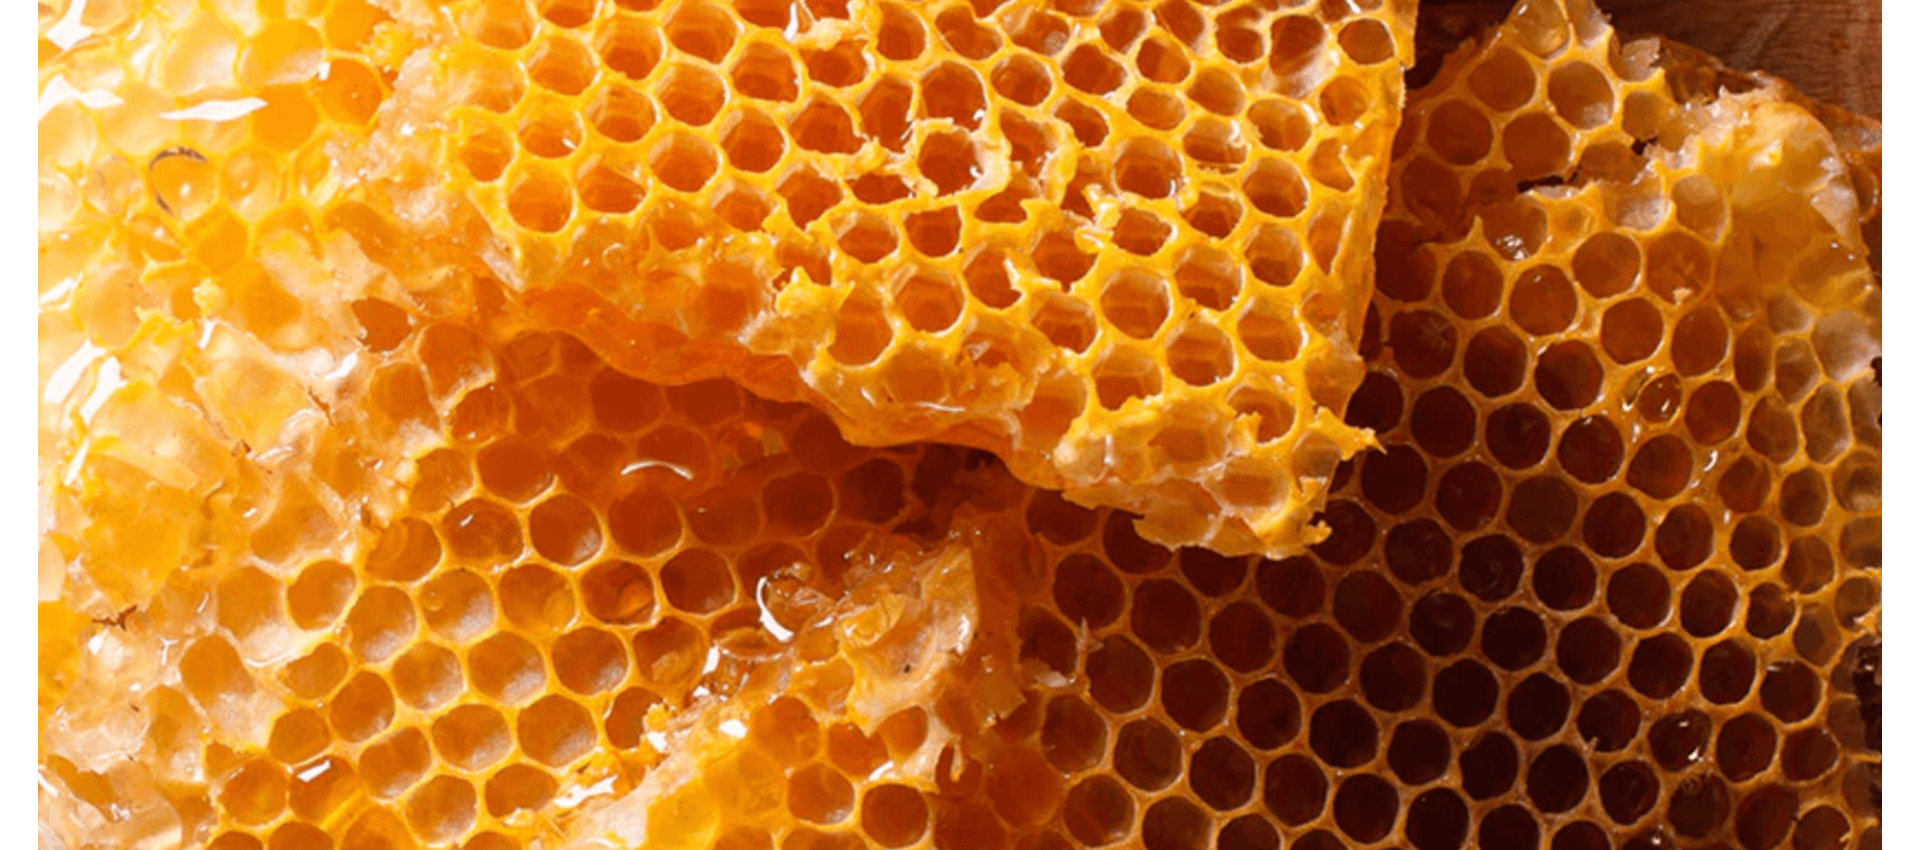 Community Trade Honey from Ethiopia